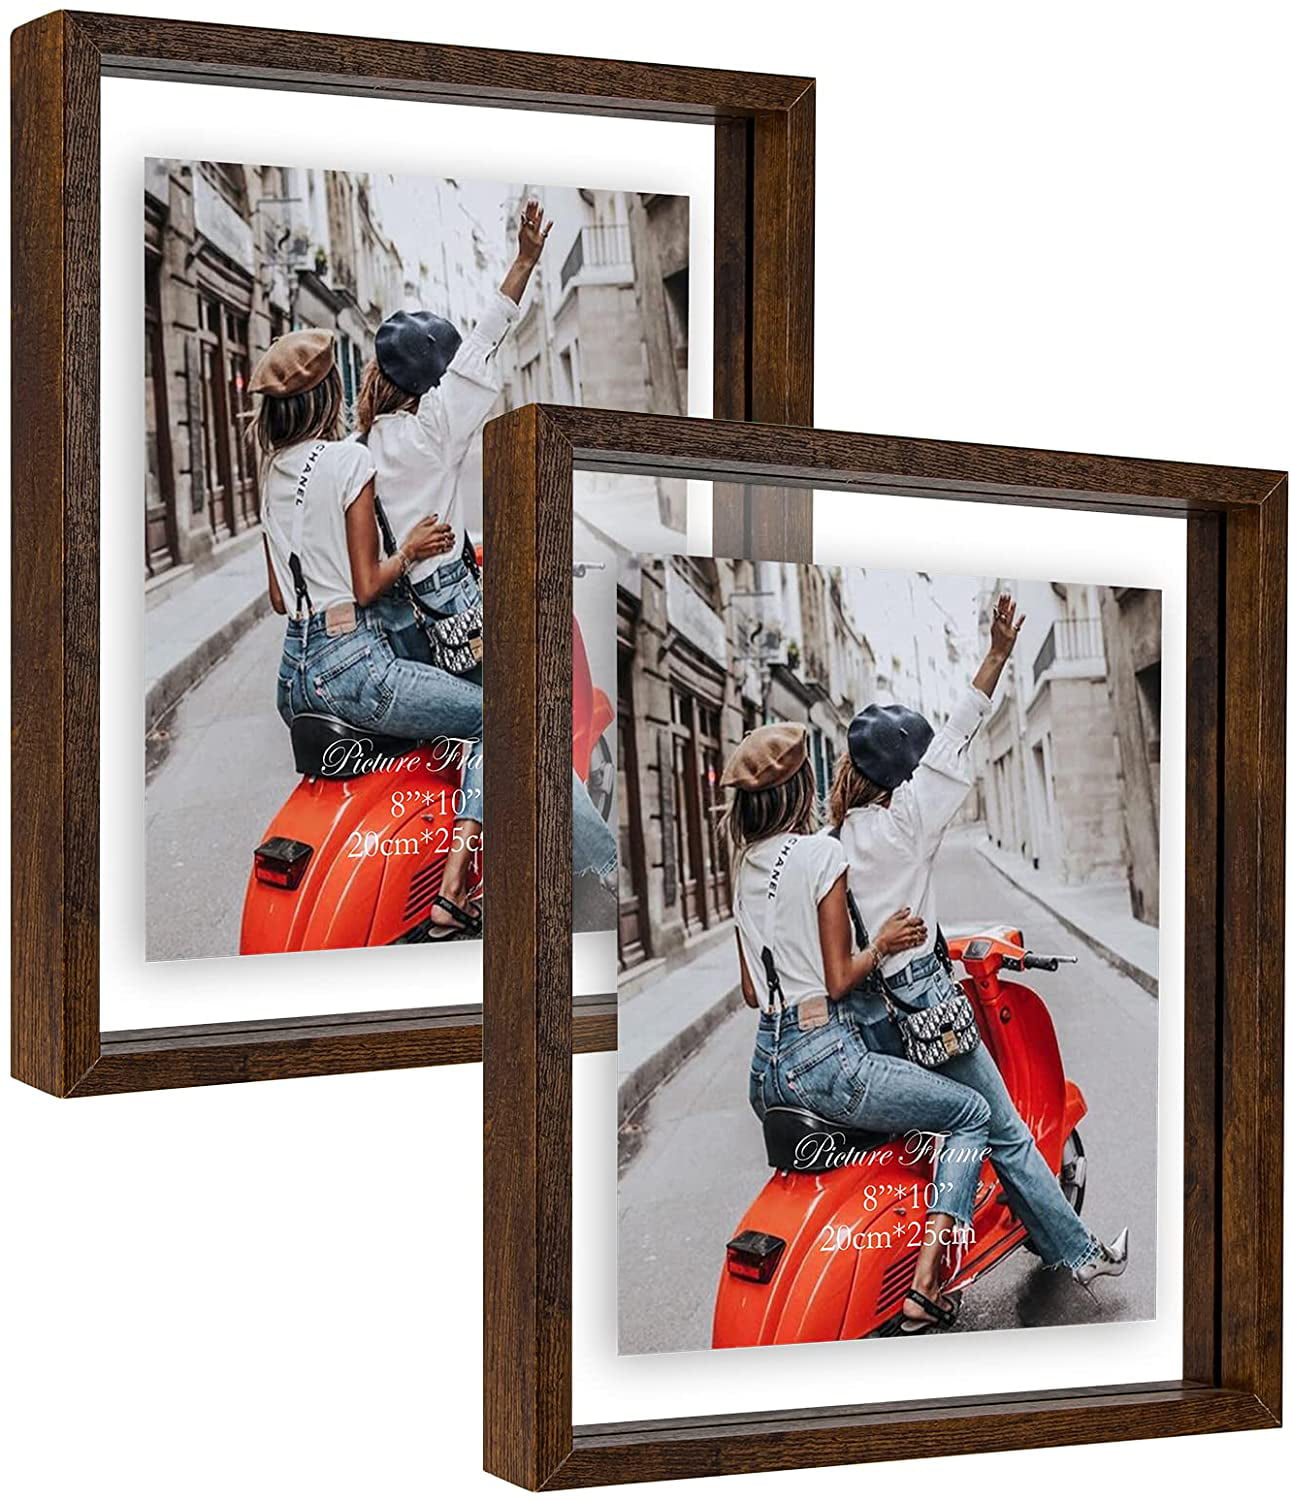 Free Shipping. Frameless 5x7 Photo Frame W/Chrome Clips Portrait or Landscape 